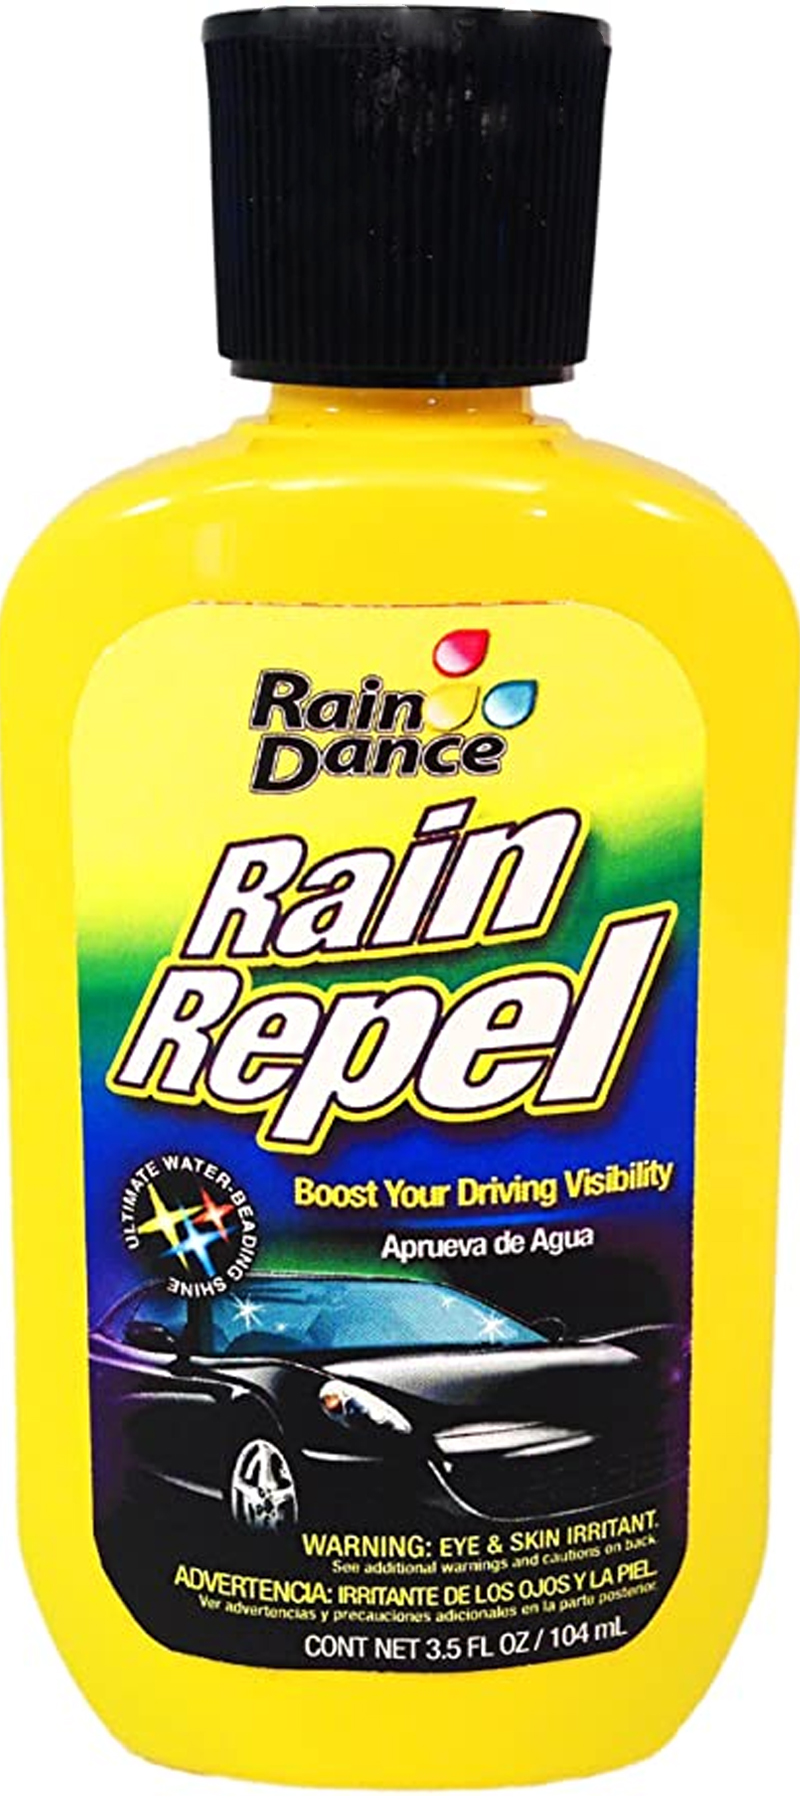 Rain Dance- Windshield Rain Repellent, 3.5 fl. oz.